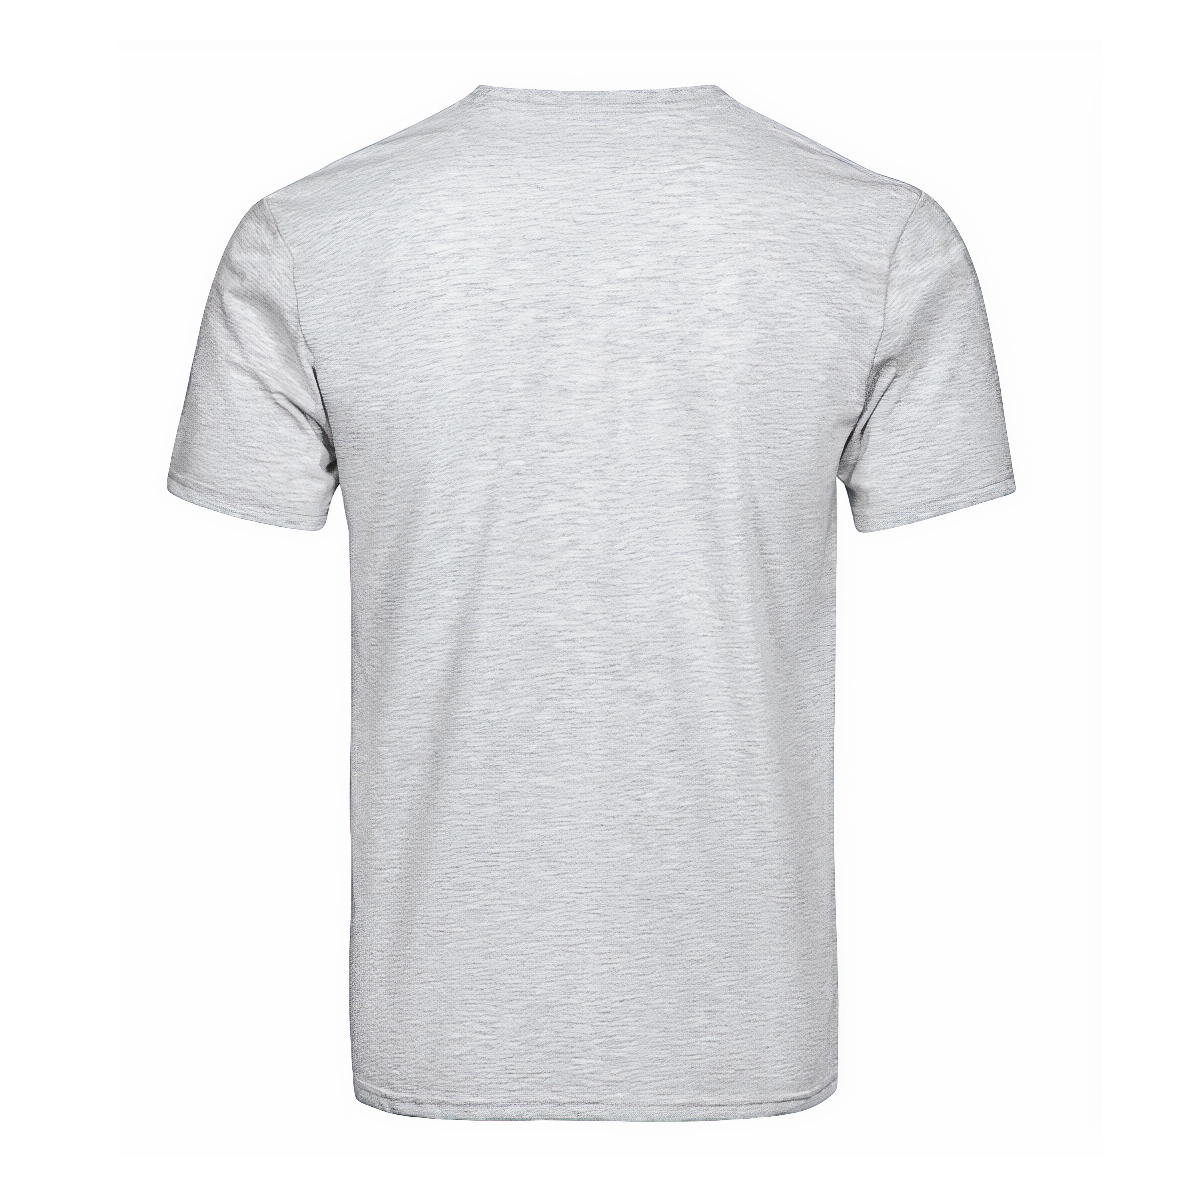 Thompson Tartan Crest T-shirt - I'm not yelling style